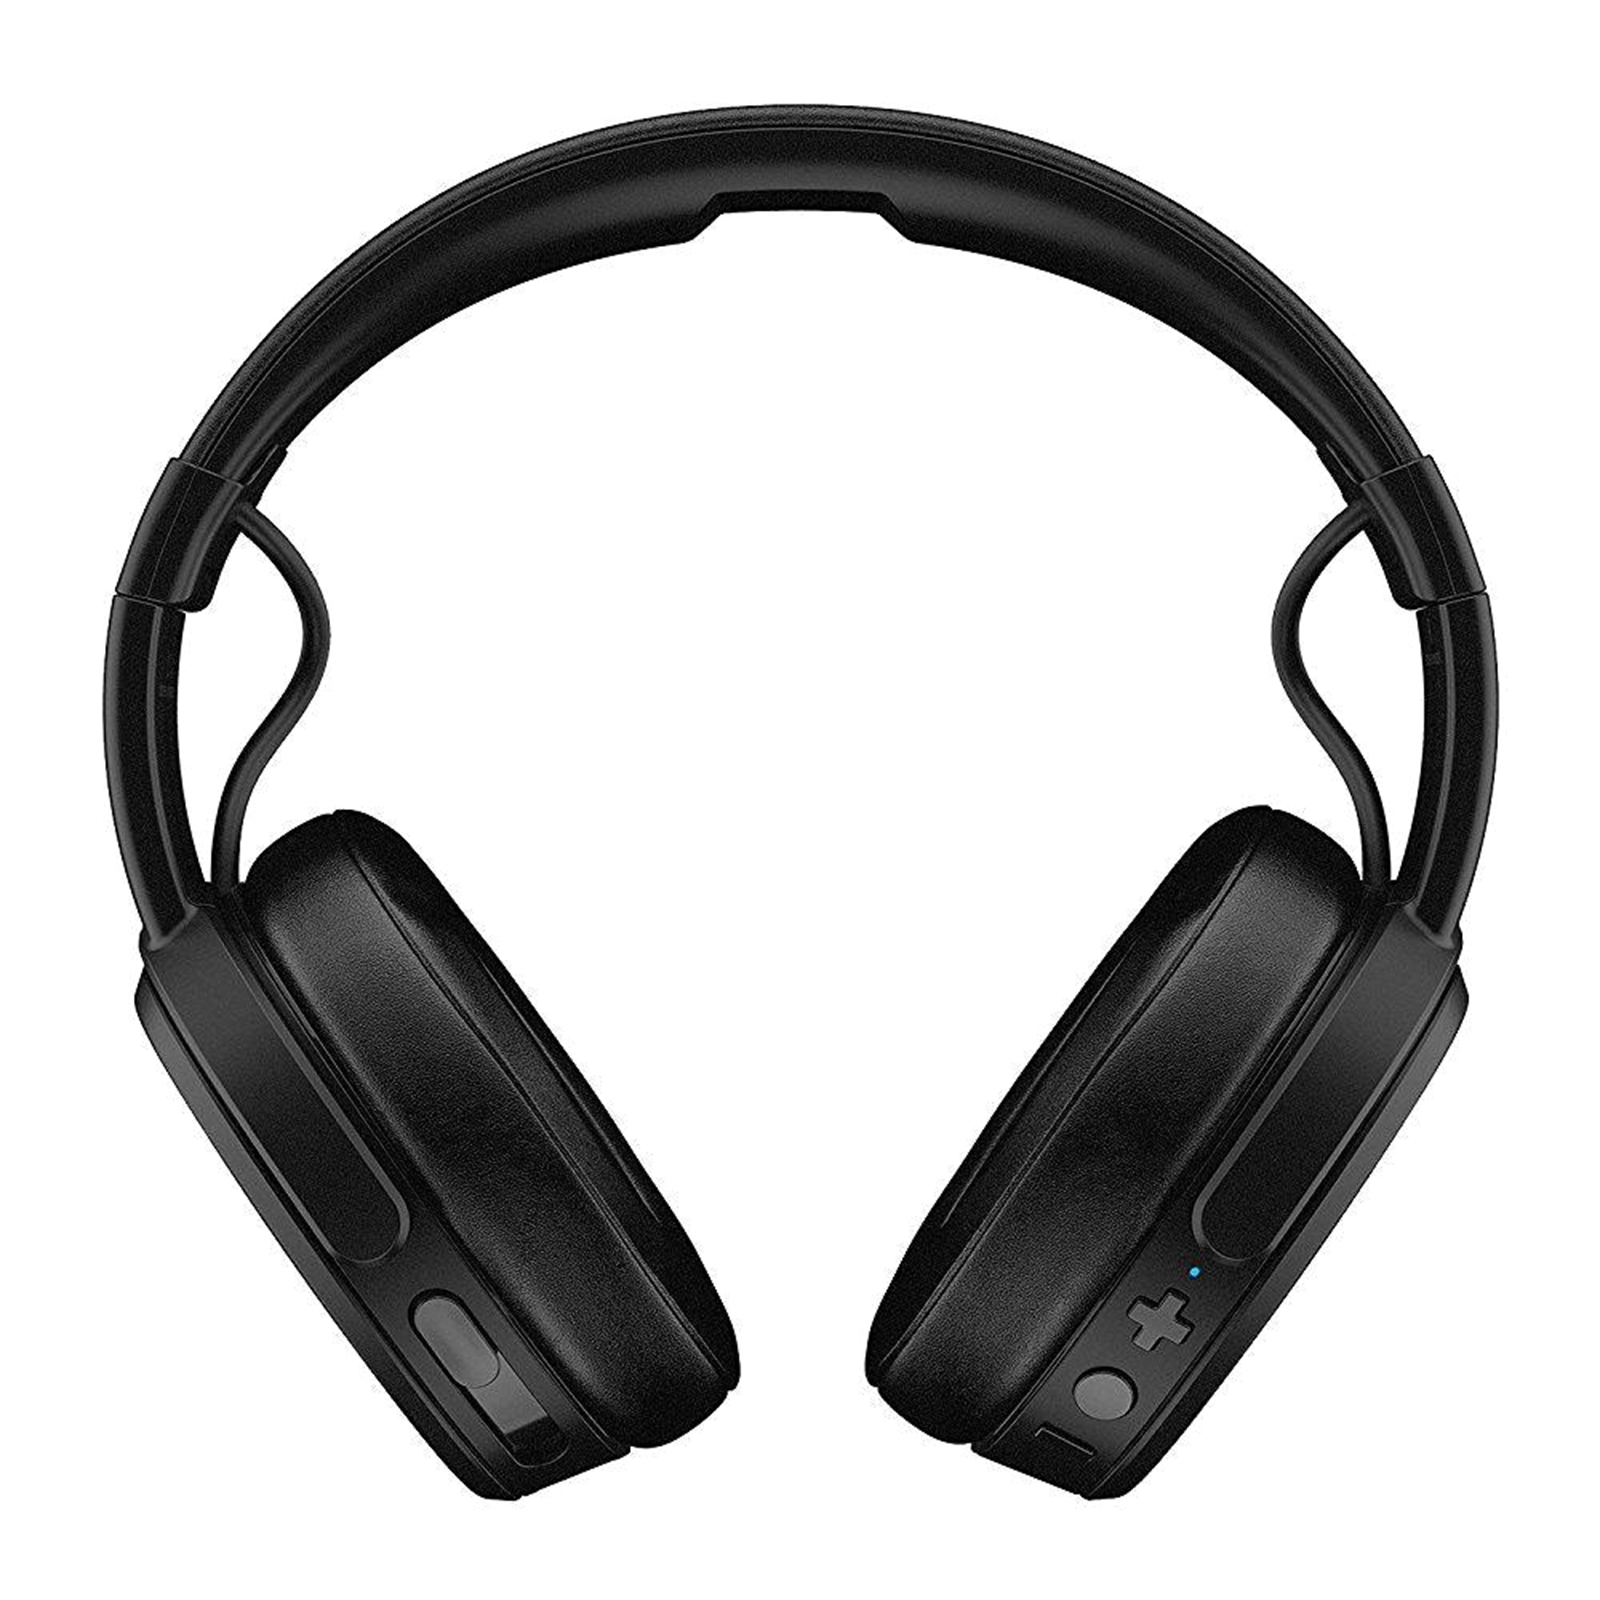 Skullcandy S6CRW-K591 Crusher Over-Ear Bluetooth Headphone with Mic - Black